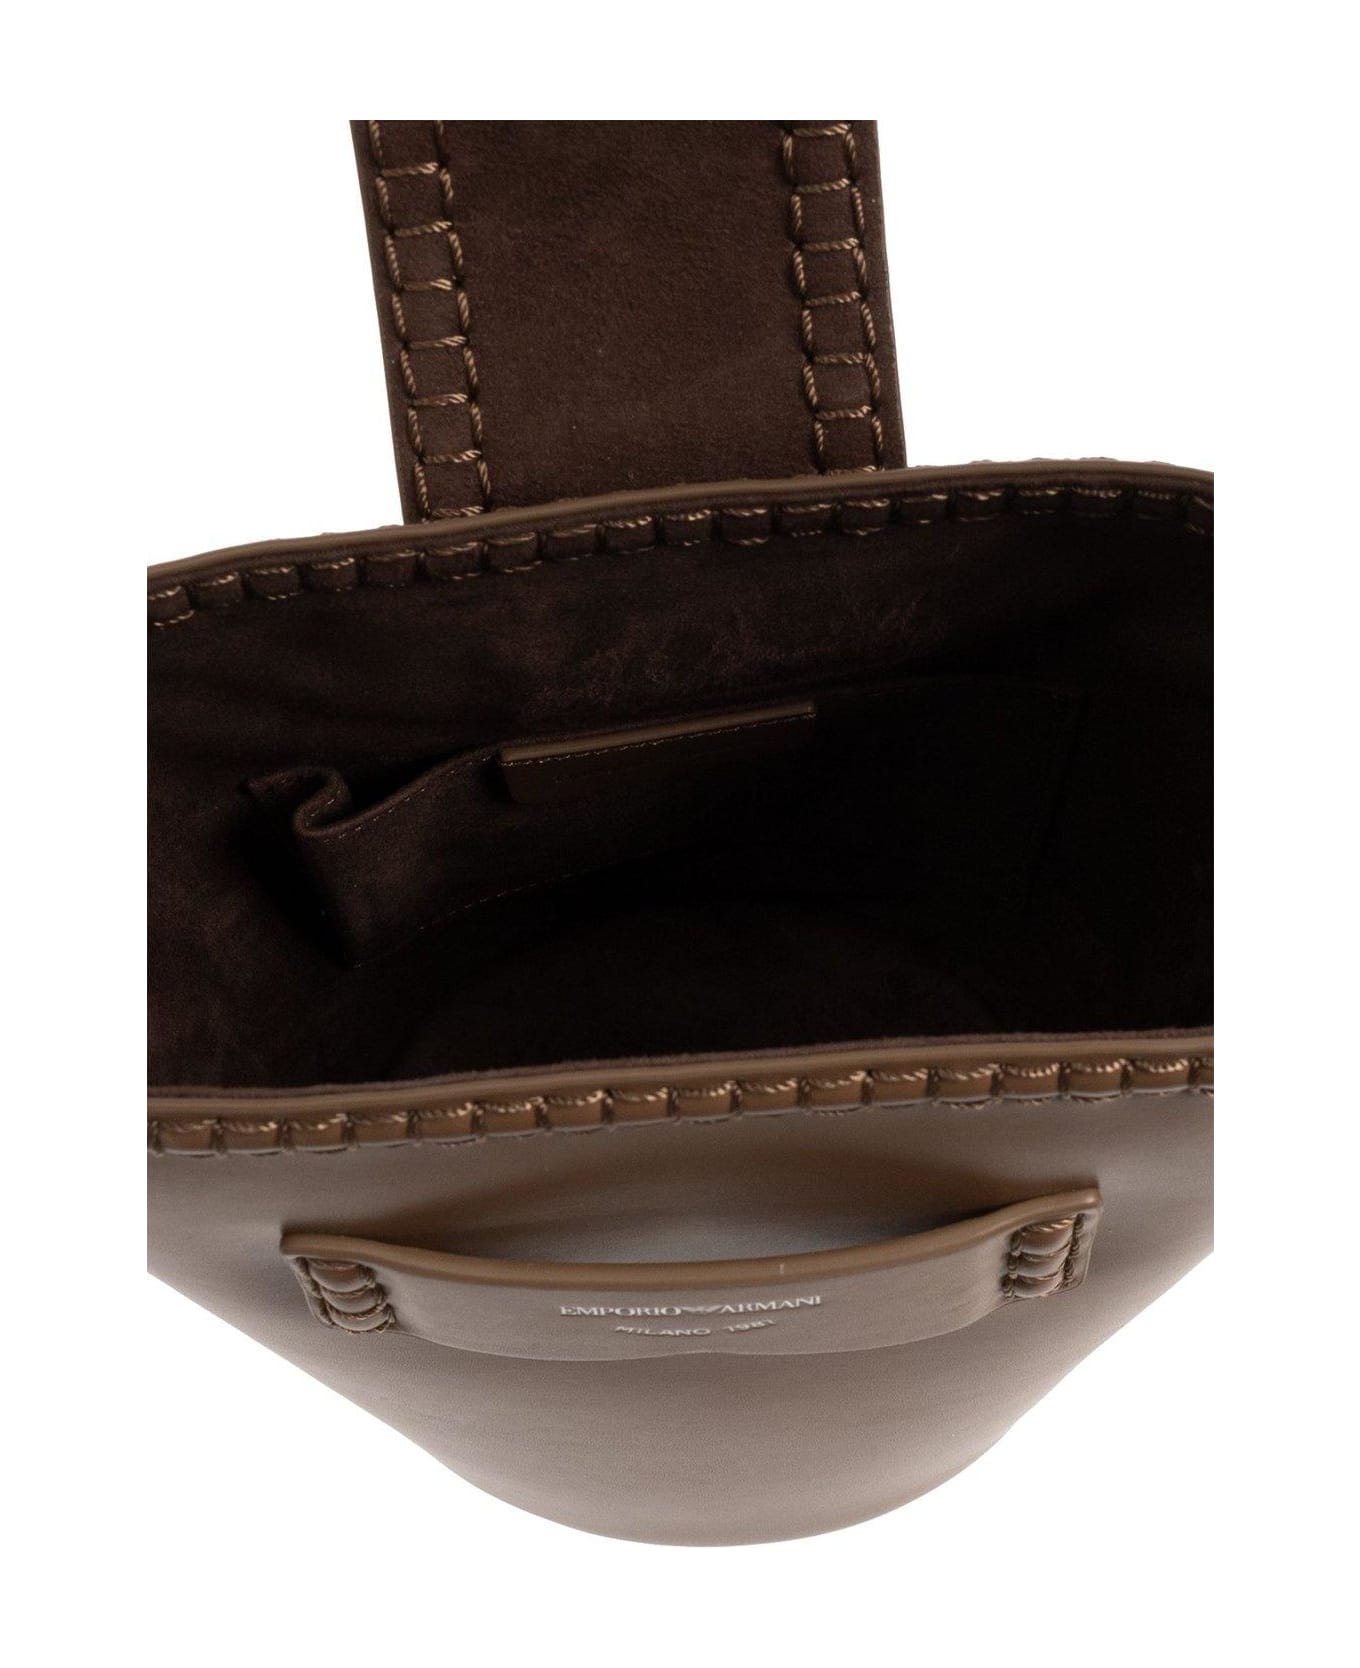 Emporio Armani Shoulder Bag With Logo - Leather Brown